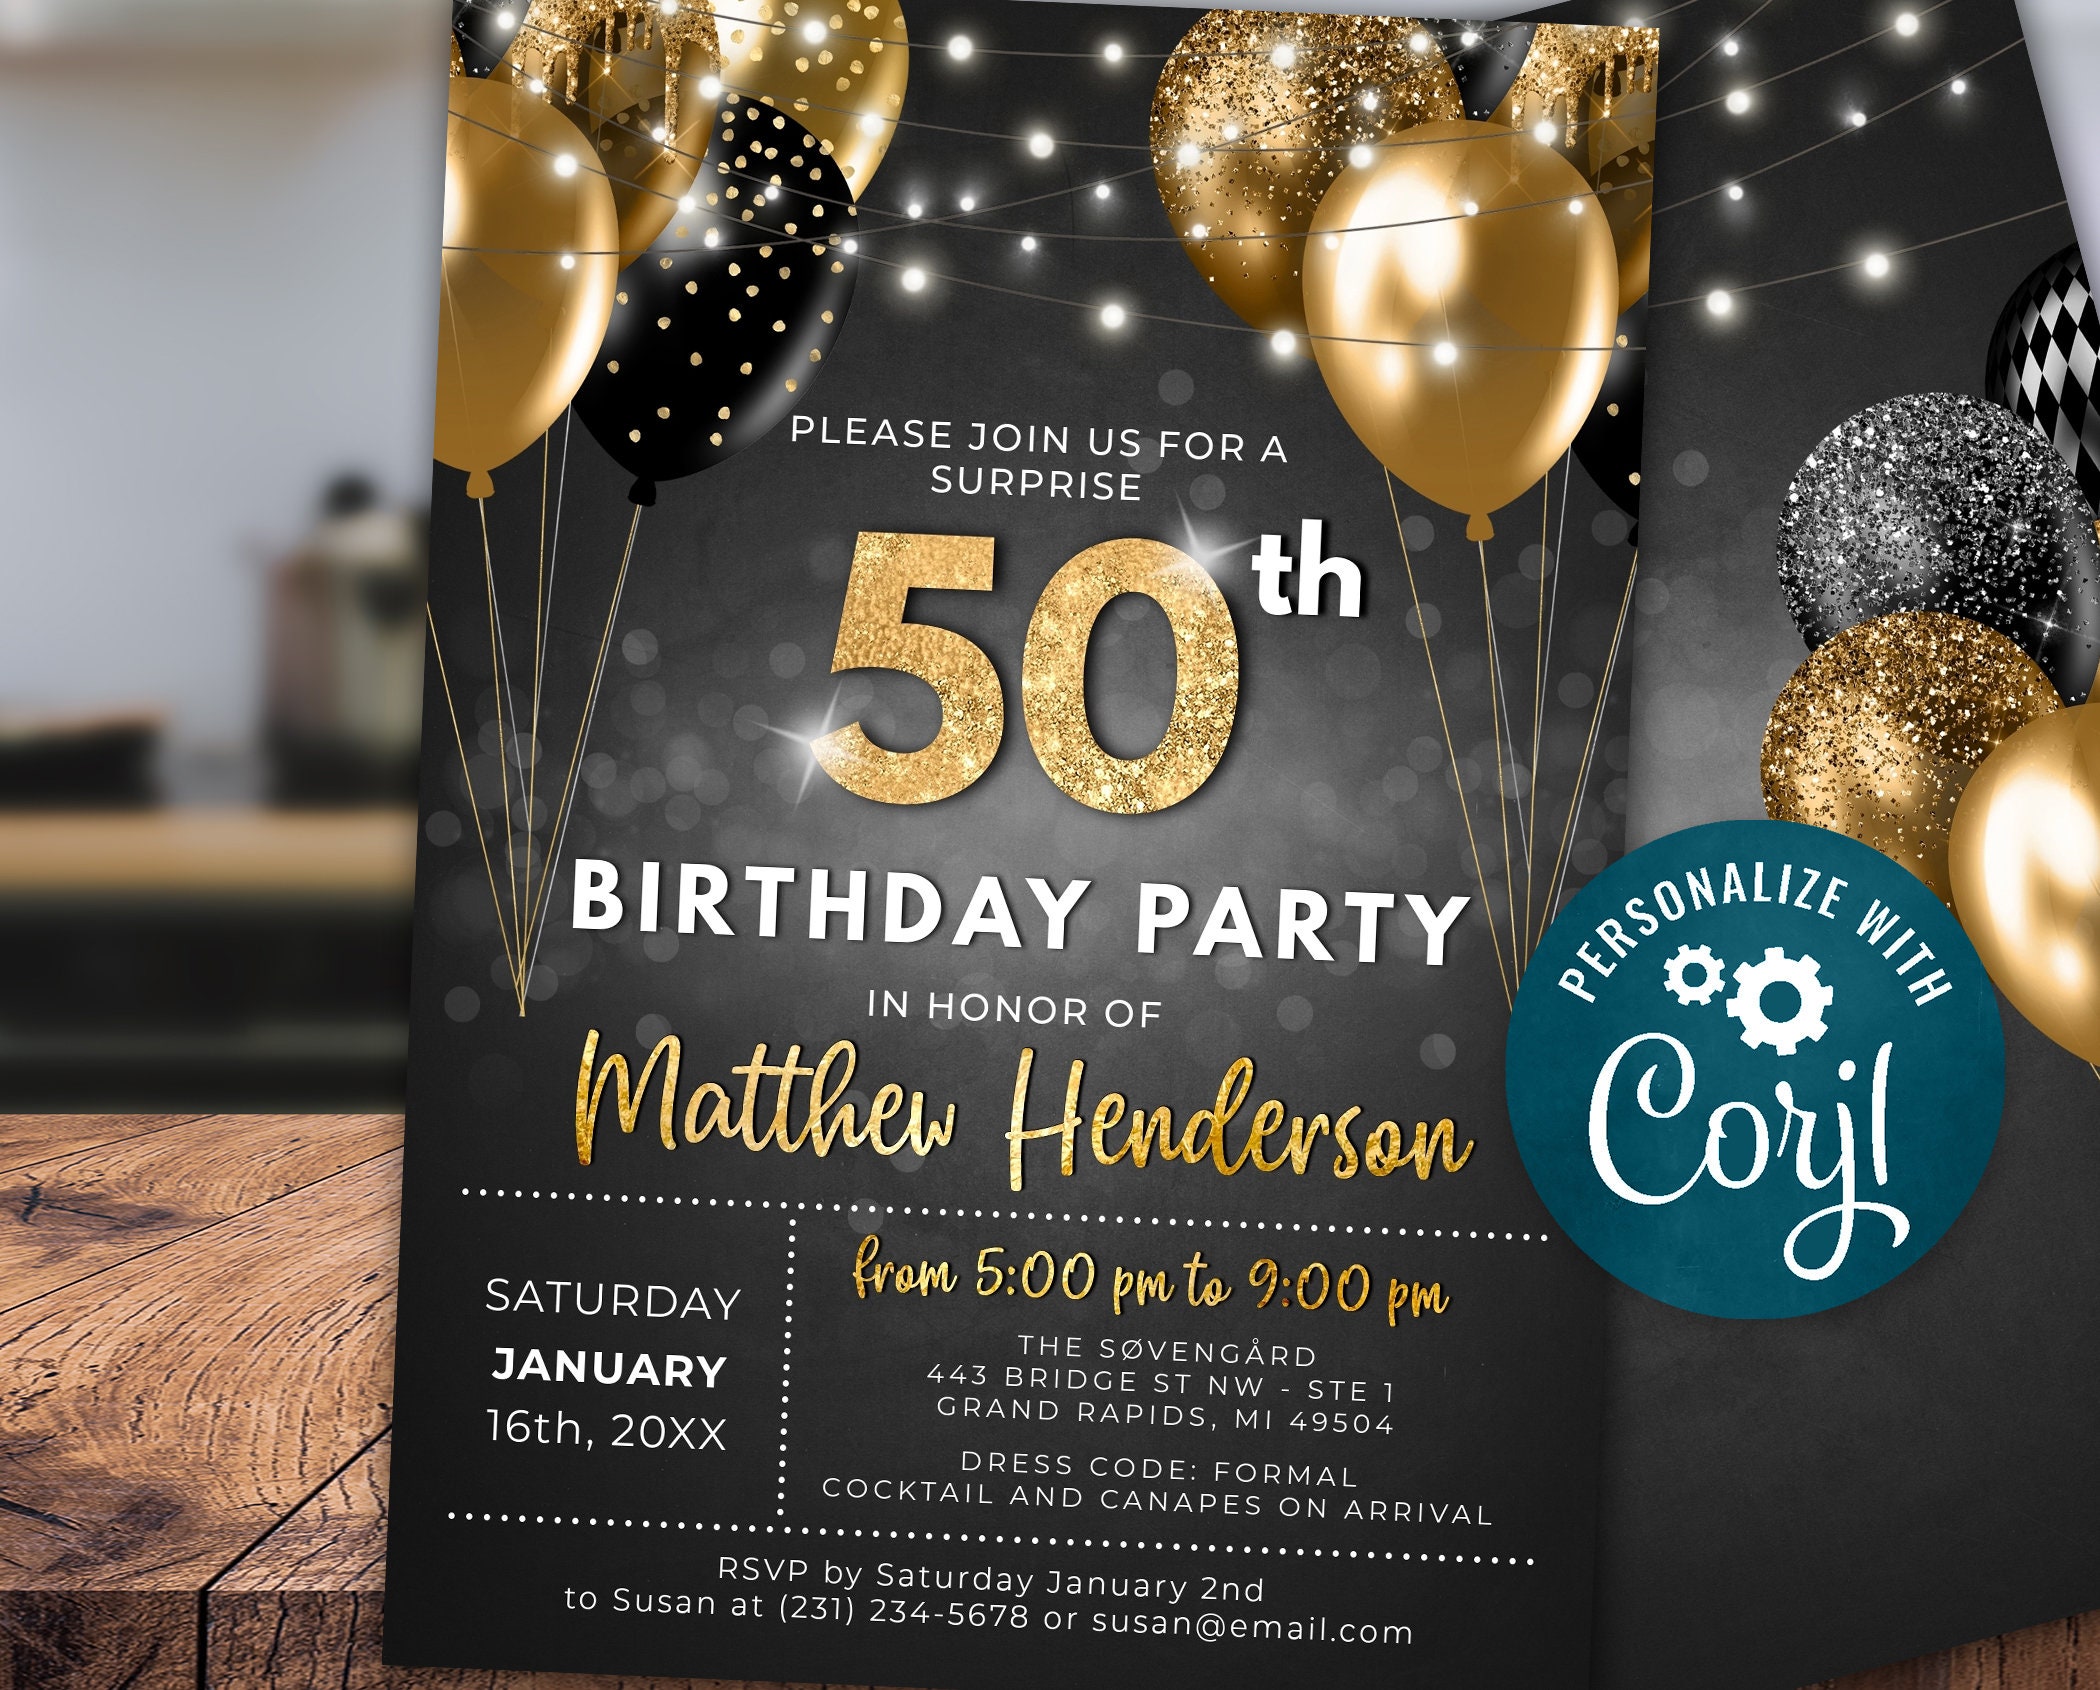 Nelbiirth Happy 50th Birthday Black & Gold Glitter Swirls Streamers Party  Decorations - 15 Pcs 50th Birthday Hanging Swirls Streamers Kit,Cheers to